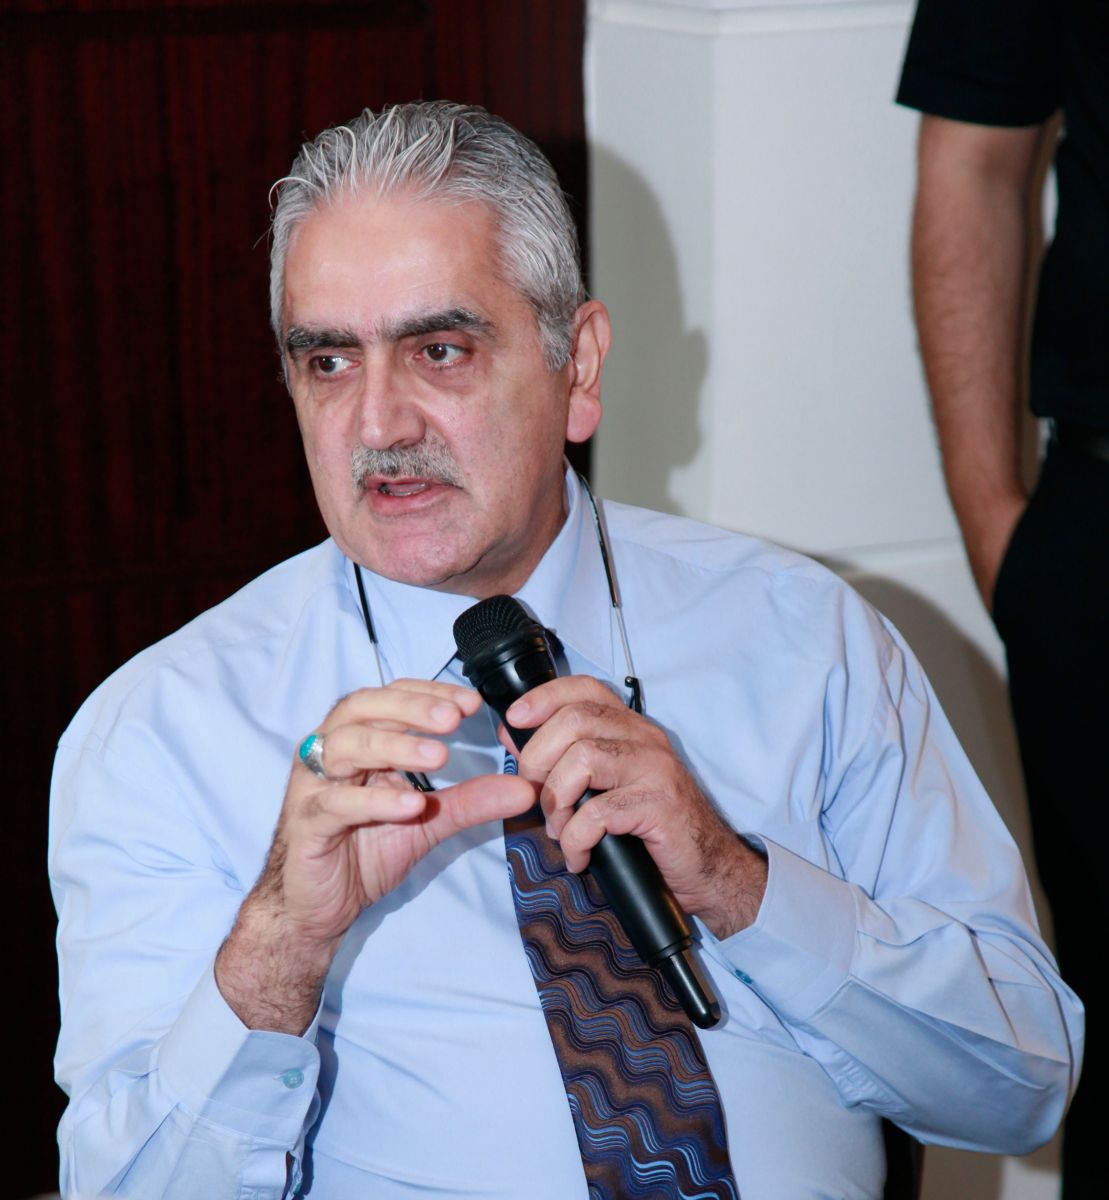 Dr. Saieb al-Gailani